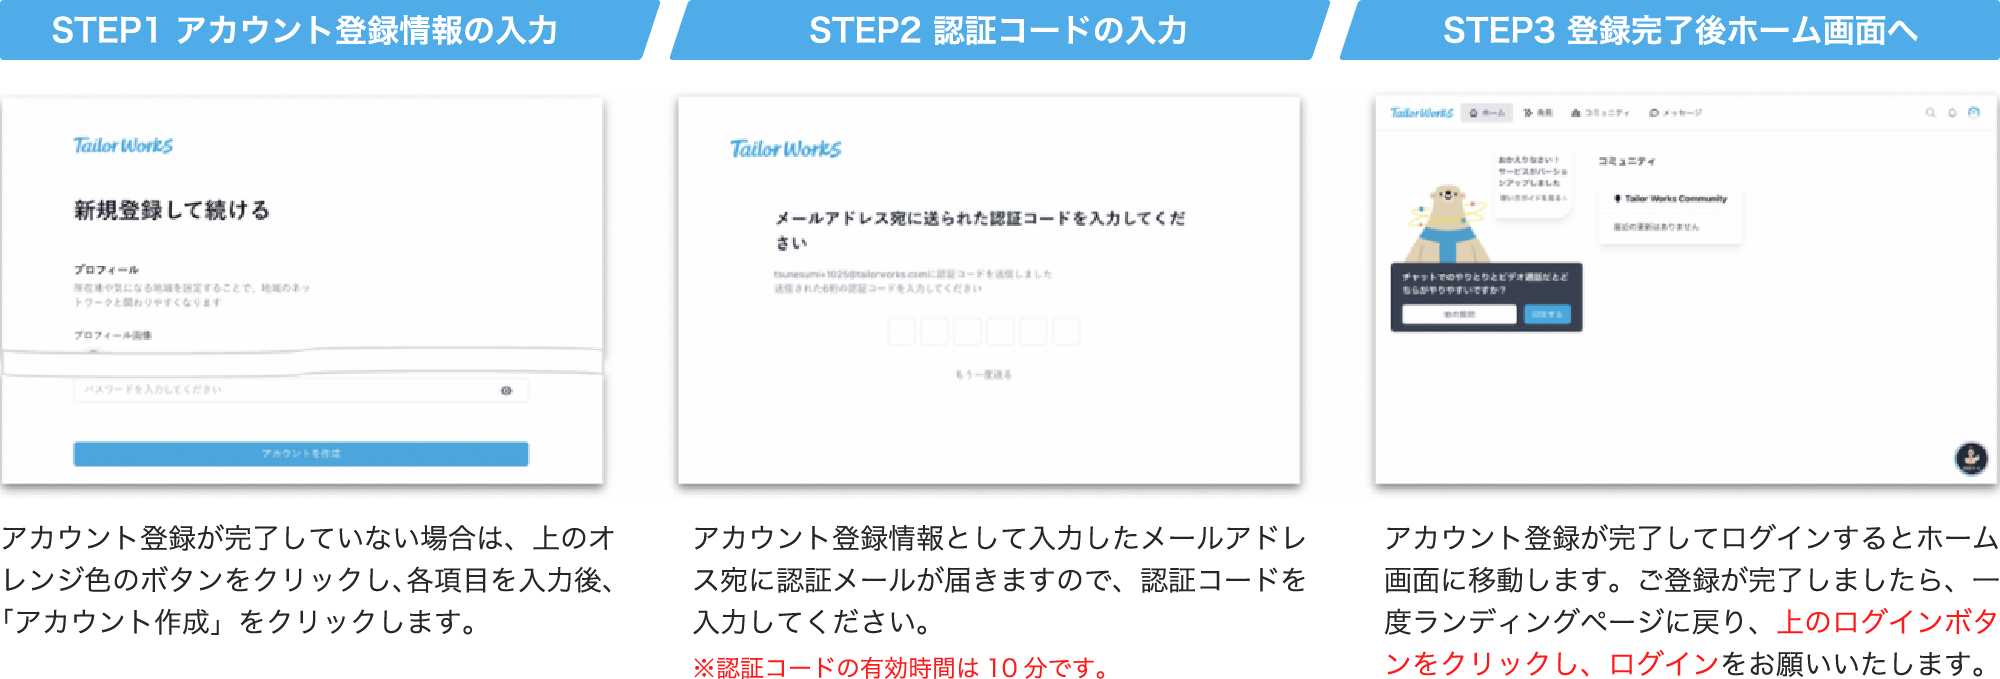 STEP1 アカウント登録情報の入力 STEP2 認証コードの入力 STEP3 登録完了後ホーム画面へ